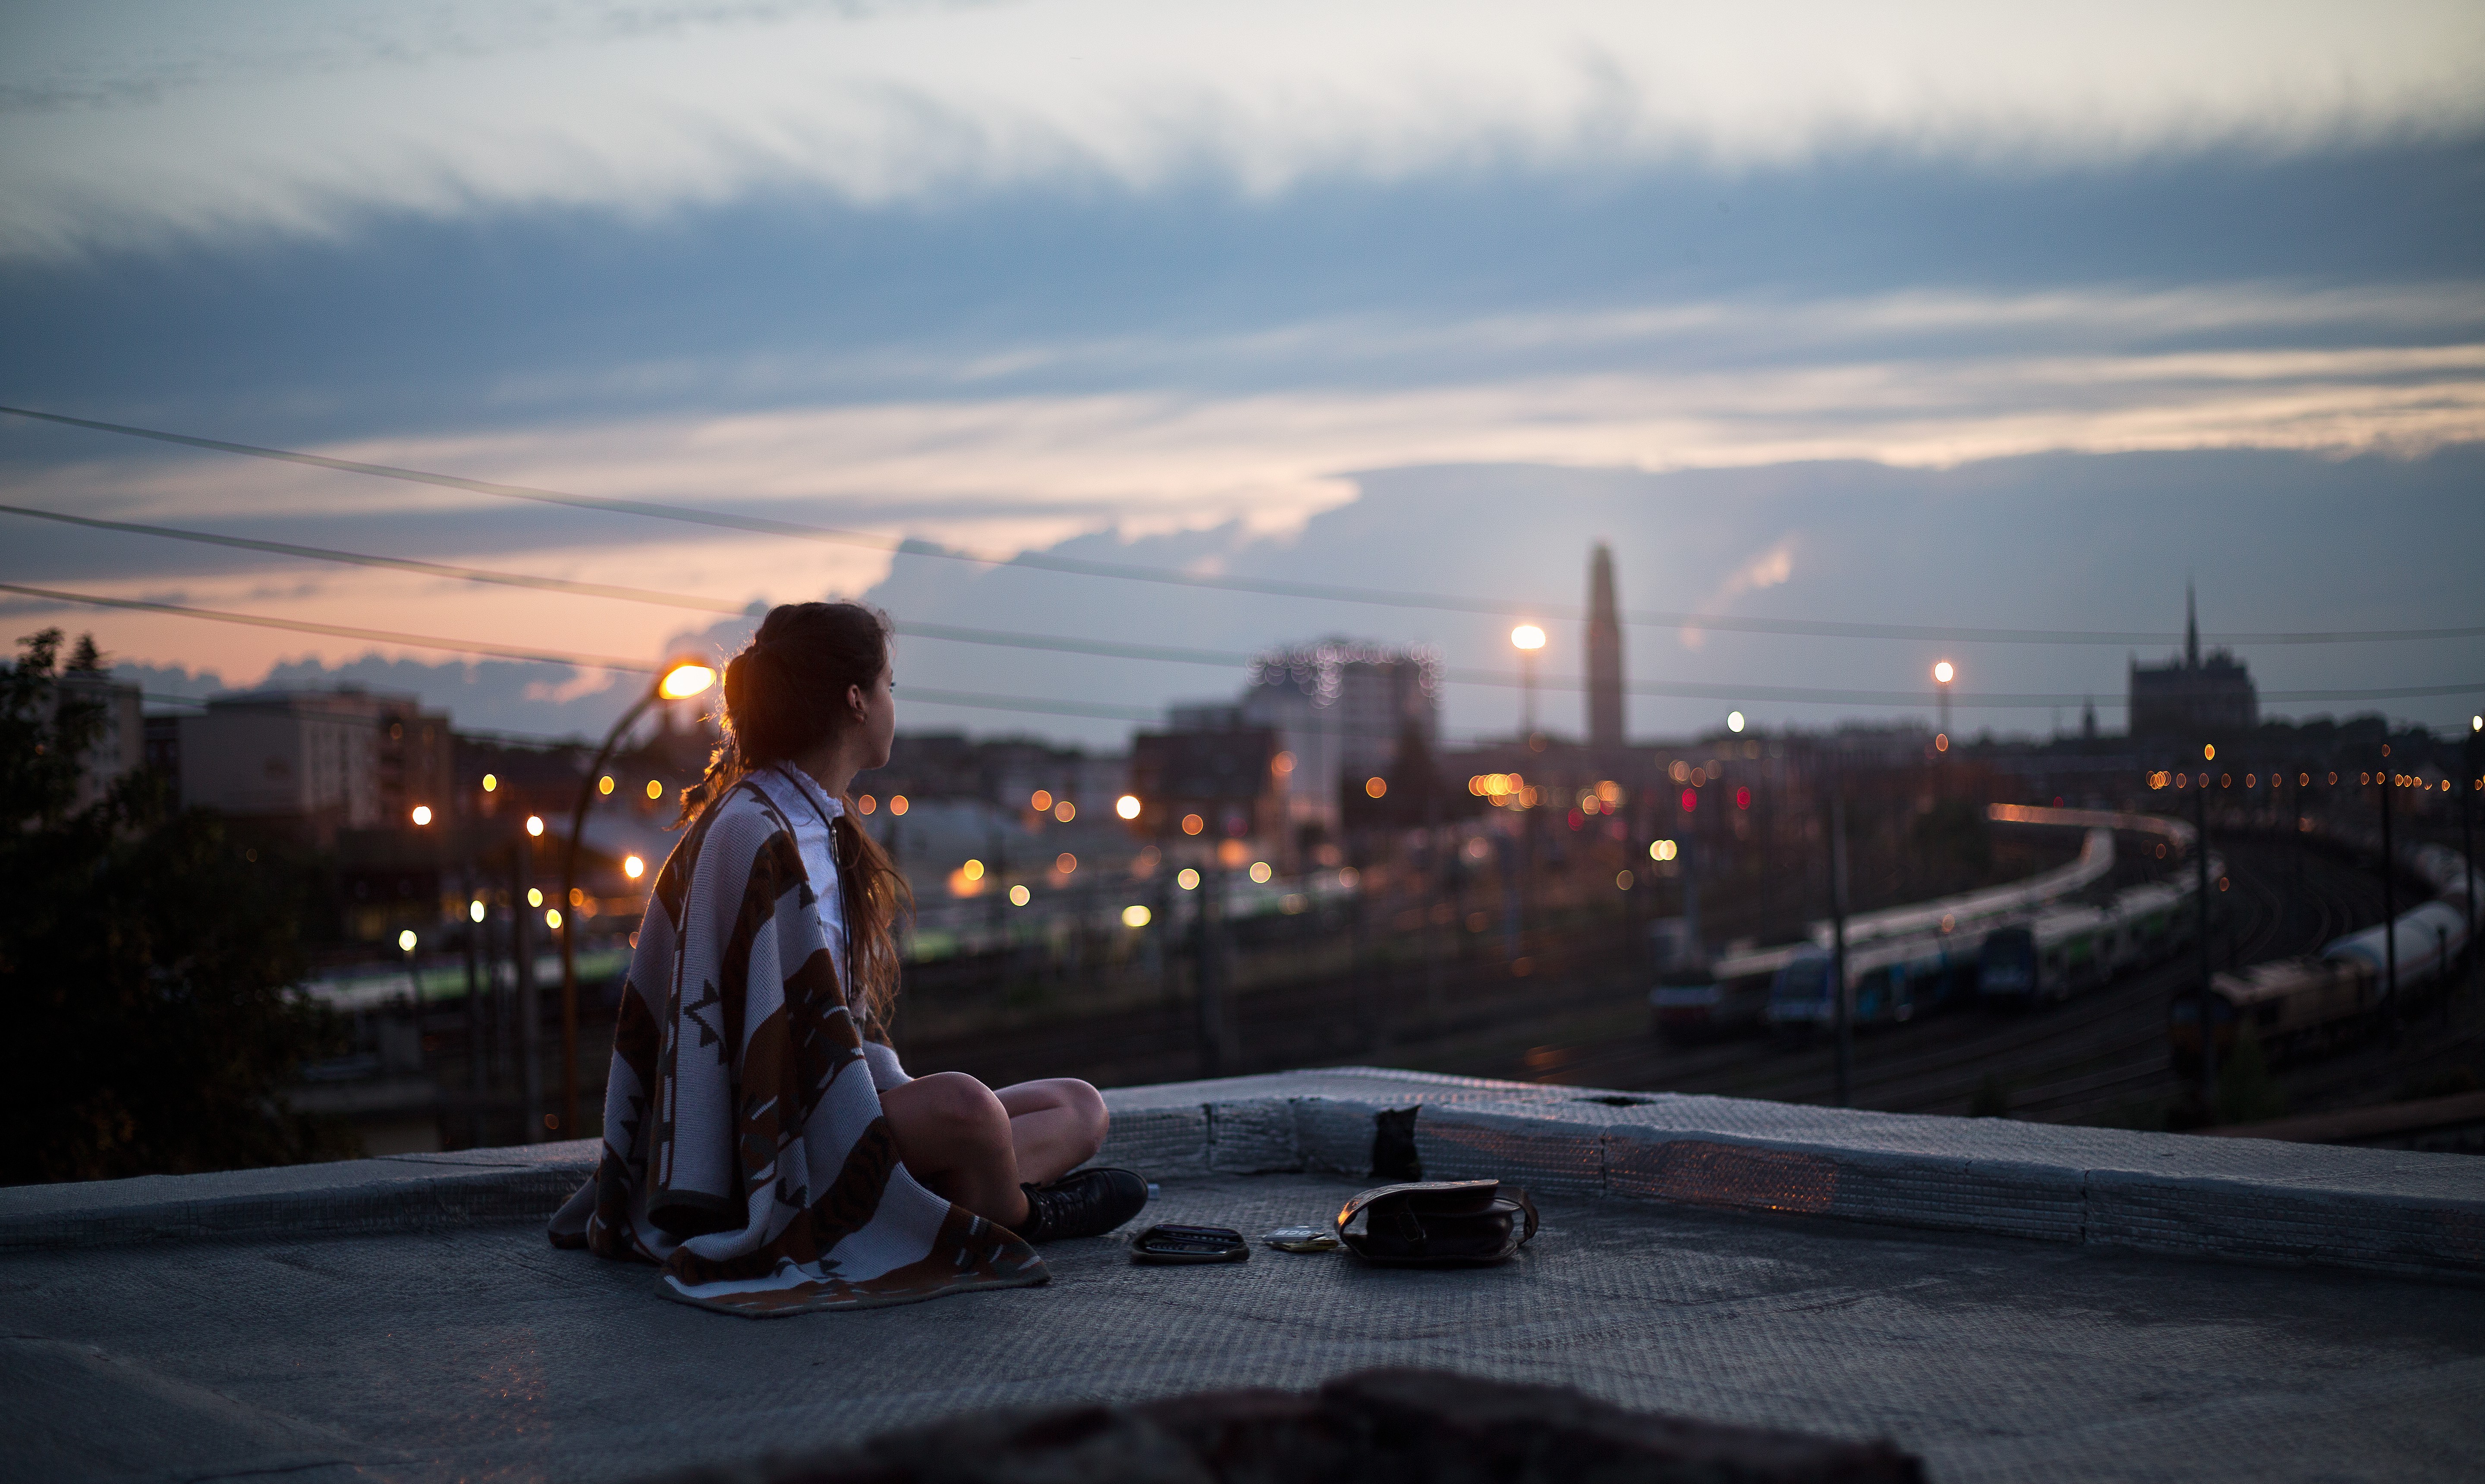 People 5760x3440 city urban rooftops calm evening sky sitting legs crossed city lights alone women